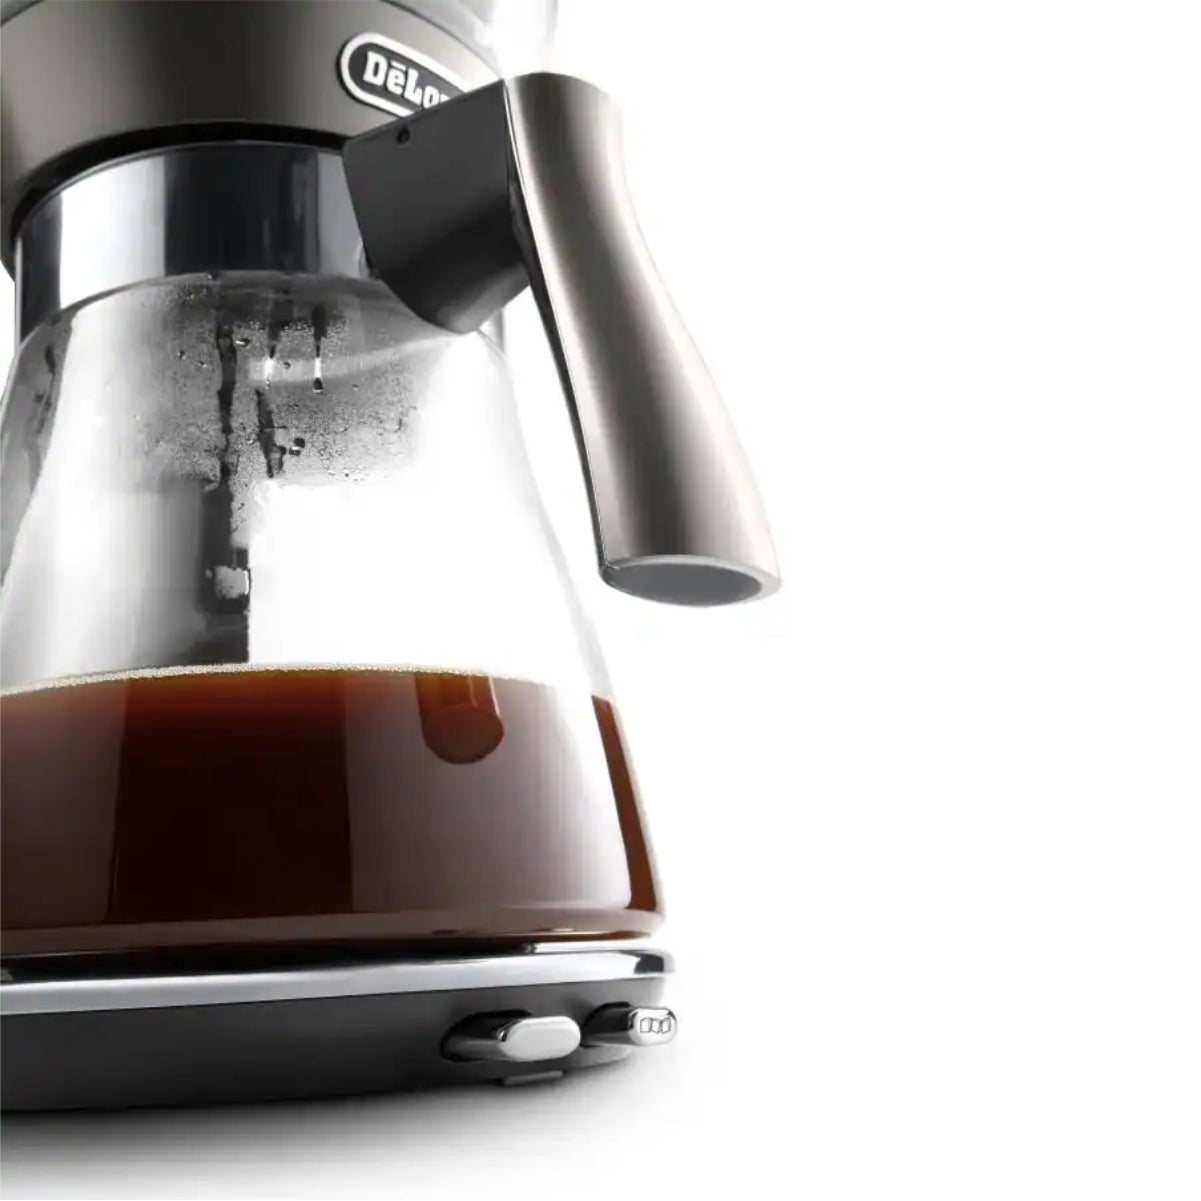 De'Longhi 3-in-1 Specialty Drip Coffee Maker - ICM17270